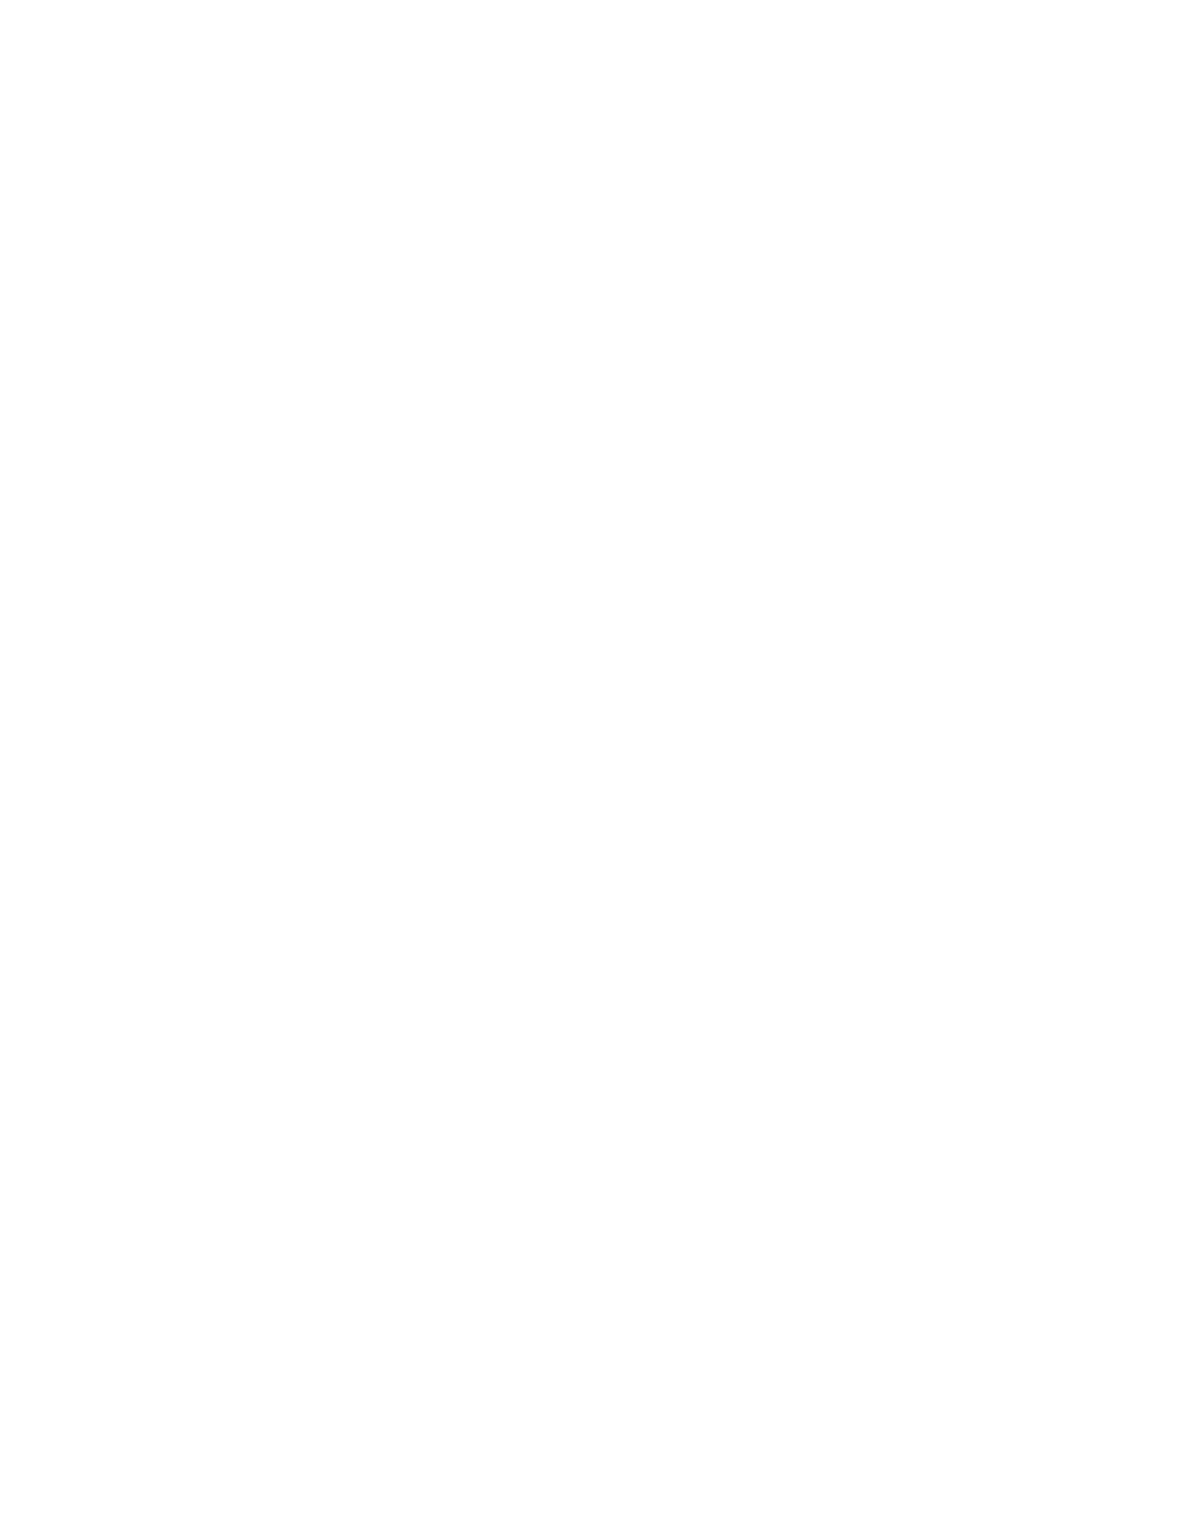 Hill Hassall Botanics